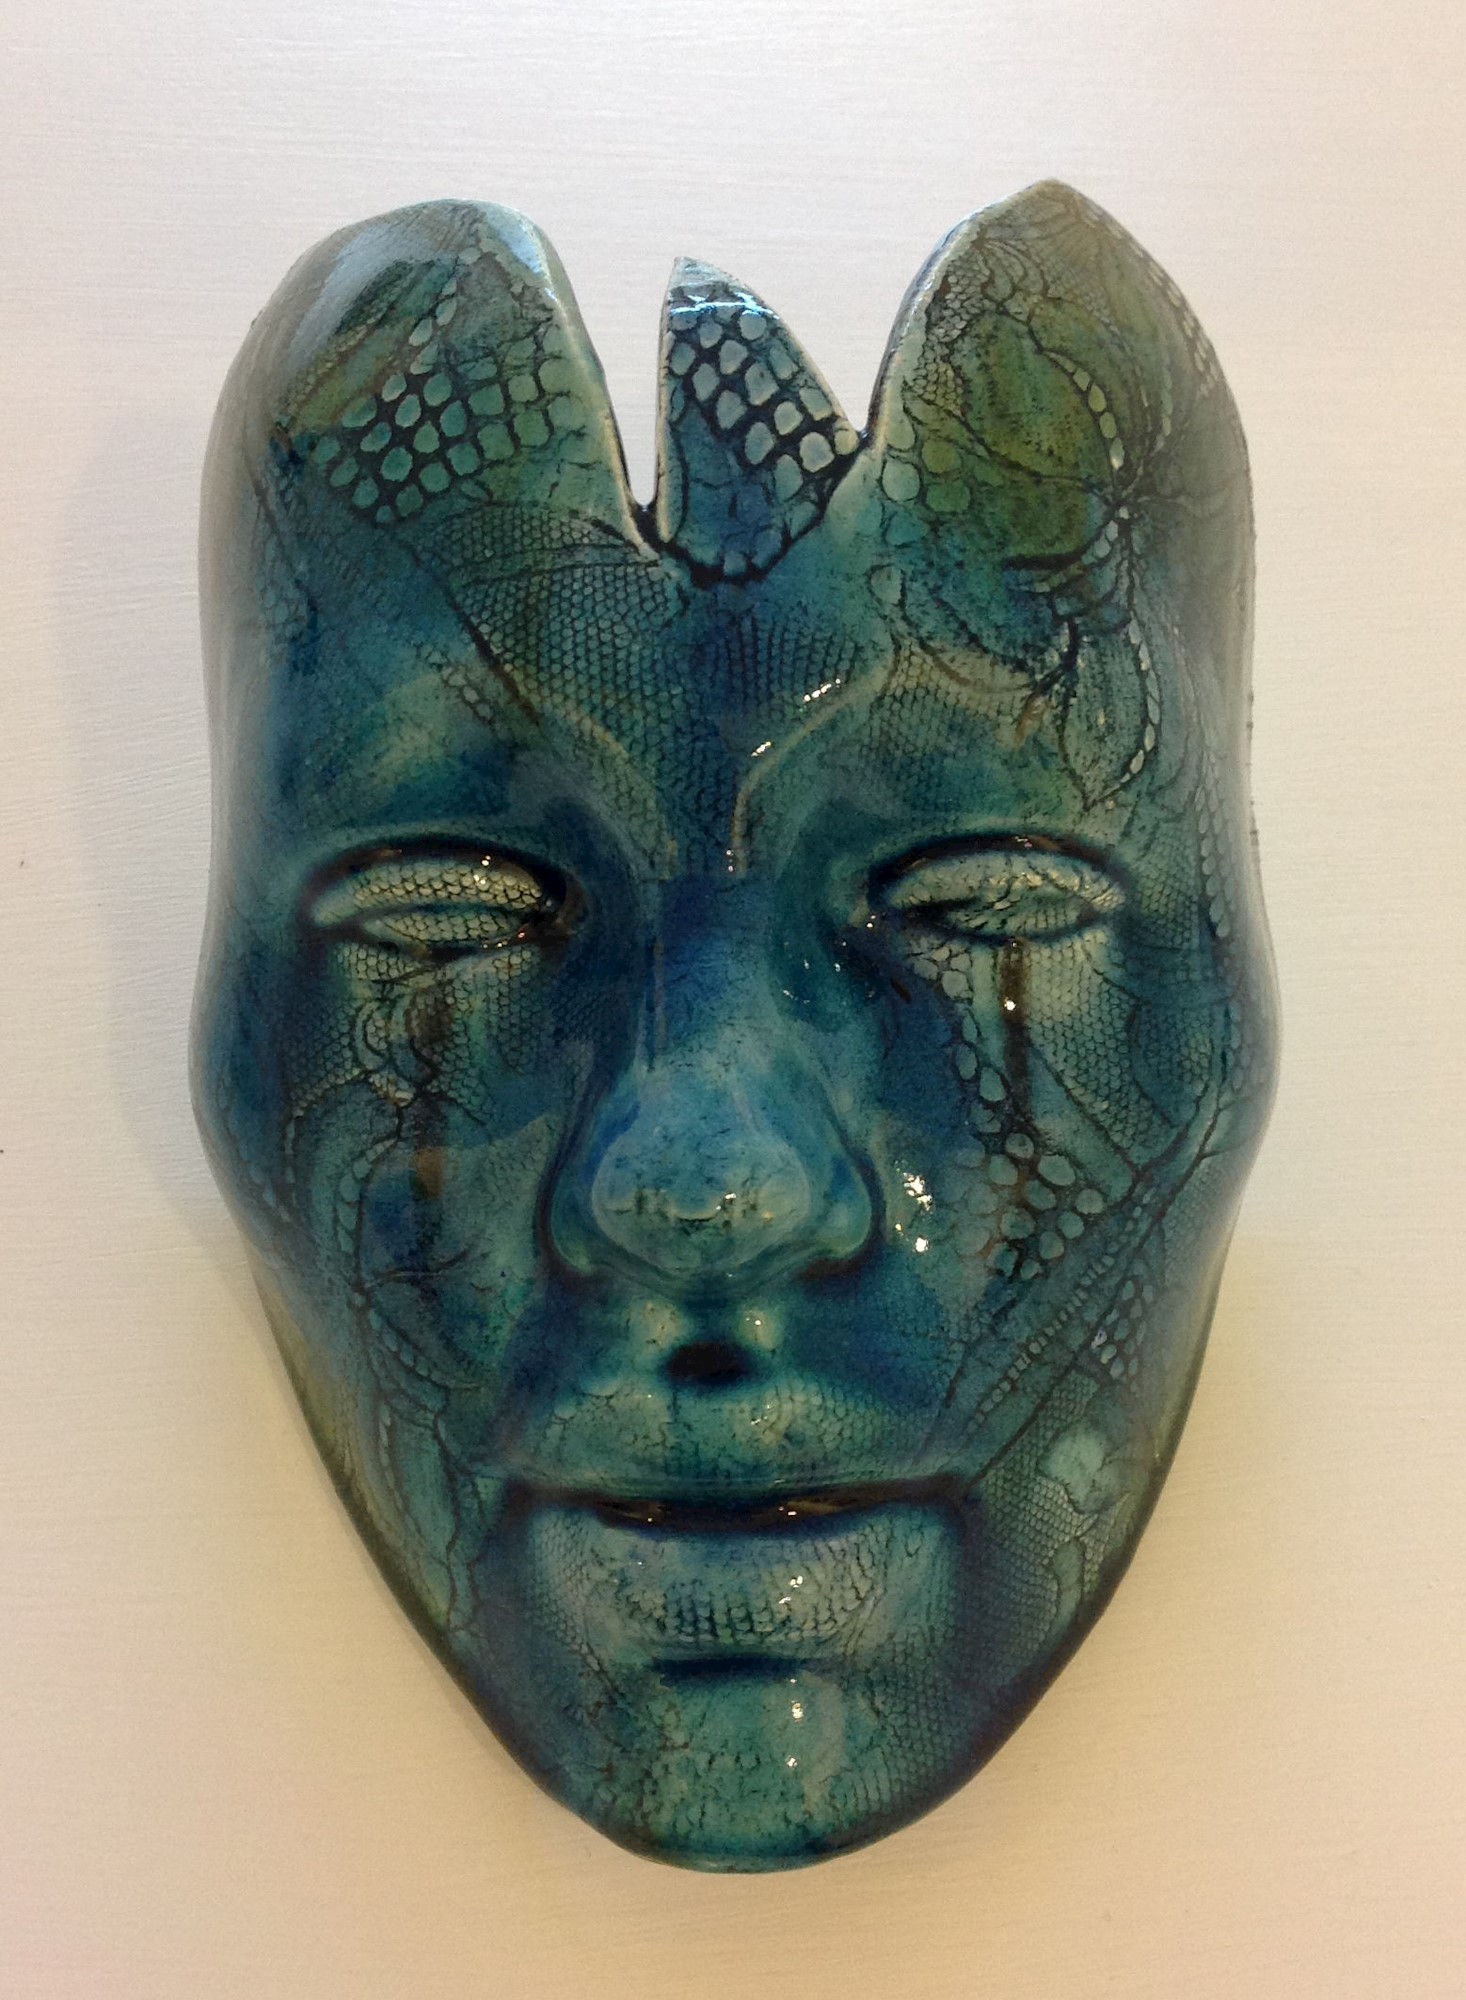 'Mask III' by artist Julian Smith